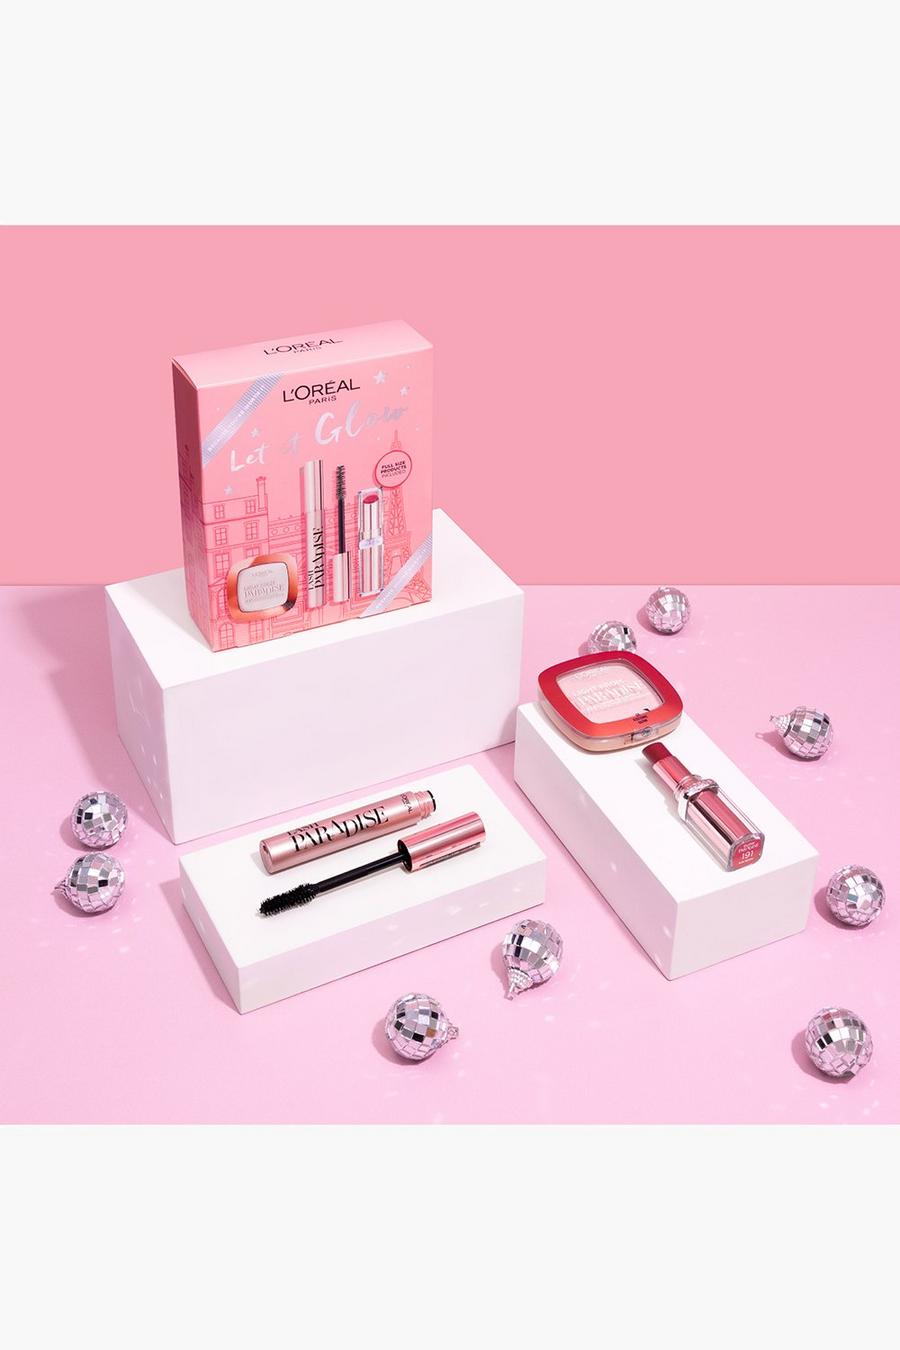 Pink L'Oréal Paris Let It Glow Lipstick, Mascara and Highlighting Powder Trio Gift Set